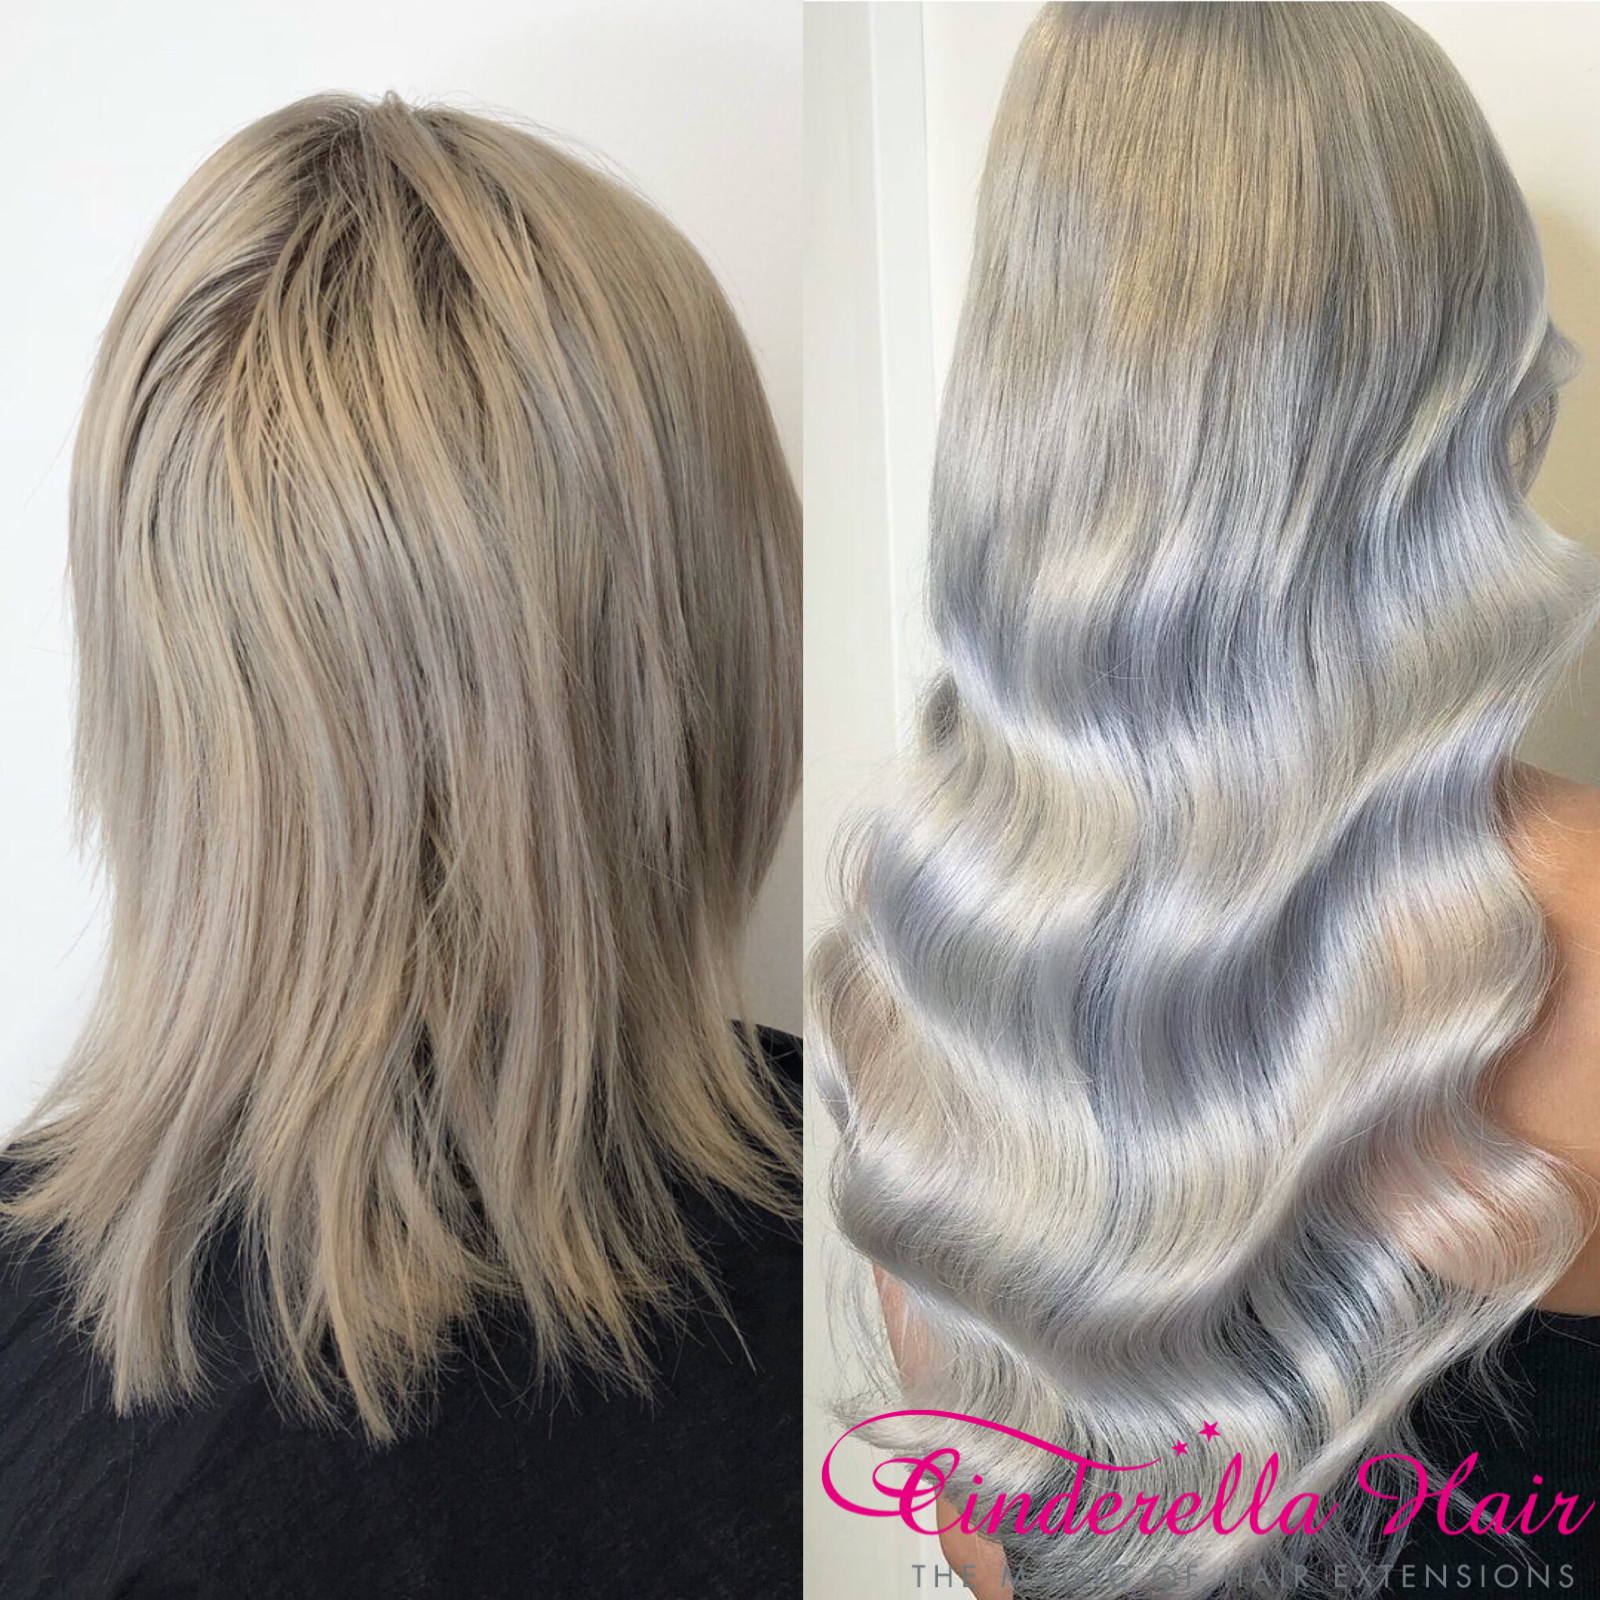 Cinderella Hair Extensions Before After 7 - Cinderella Hair